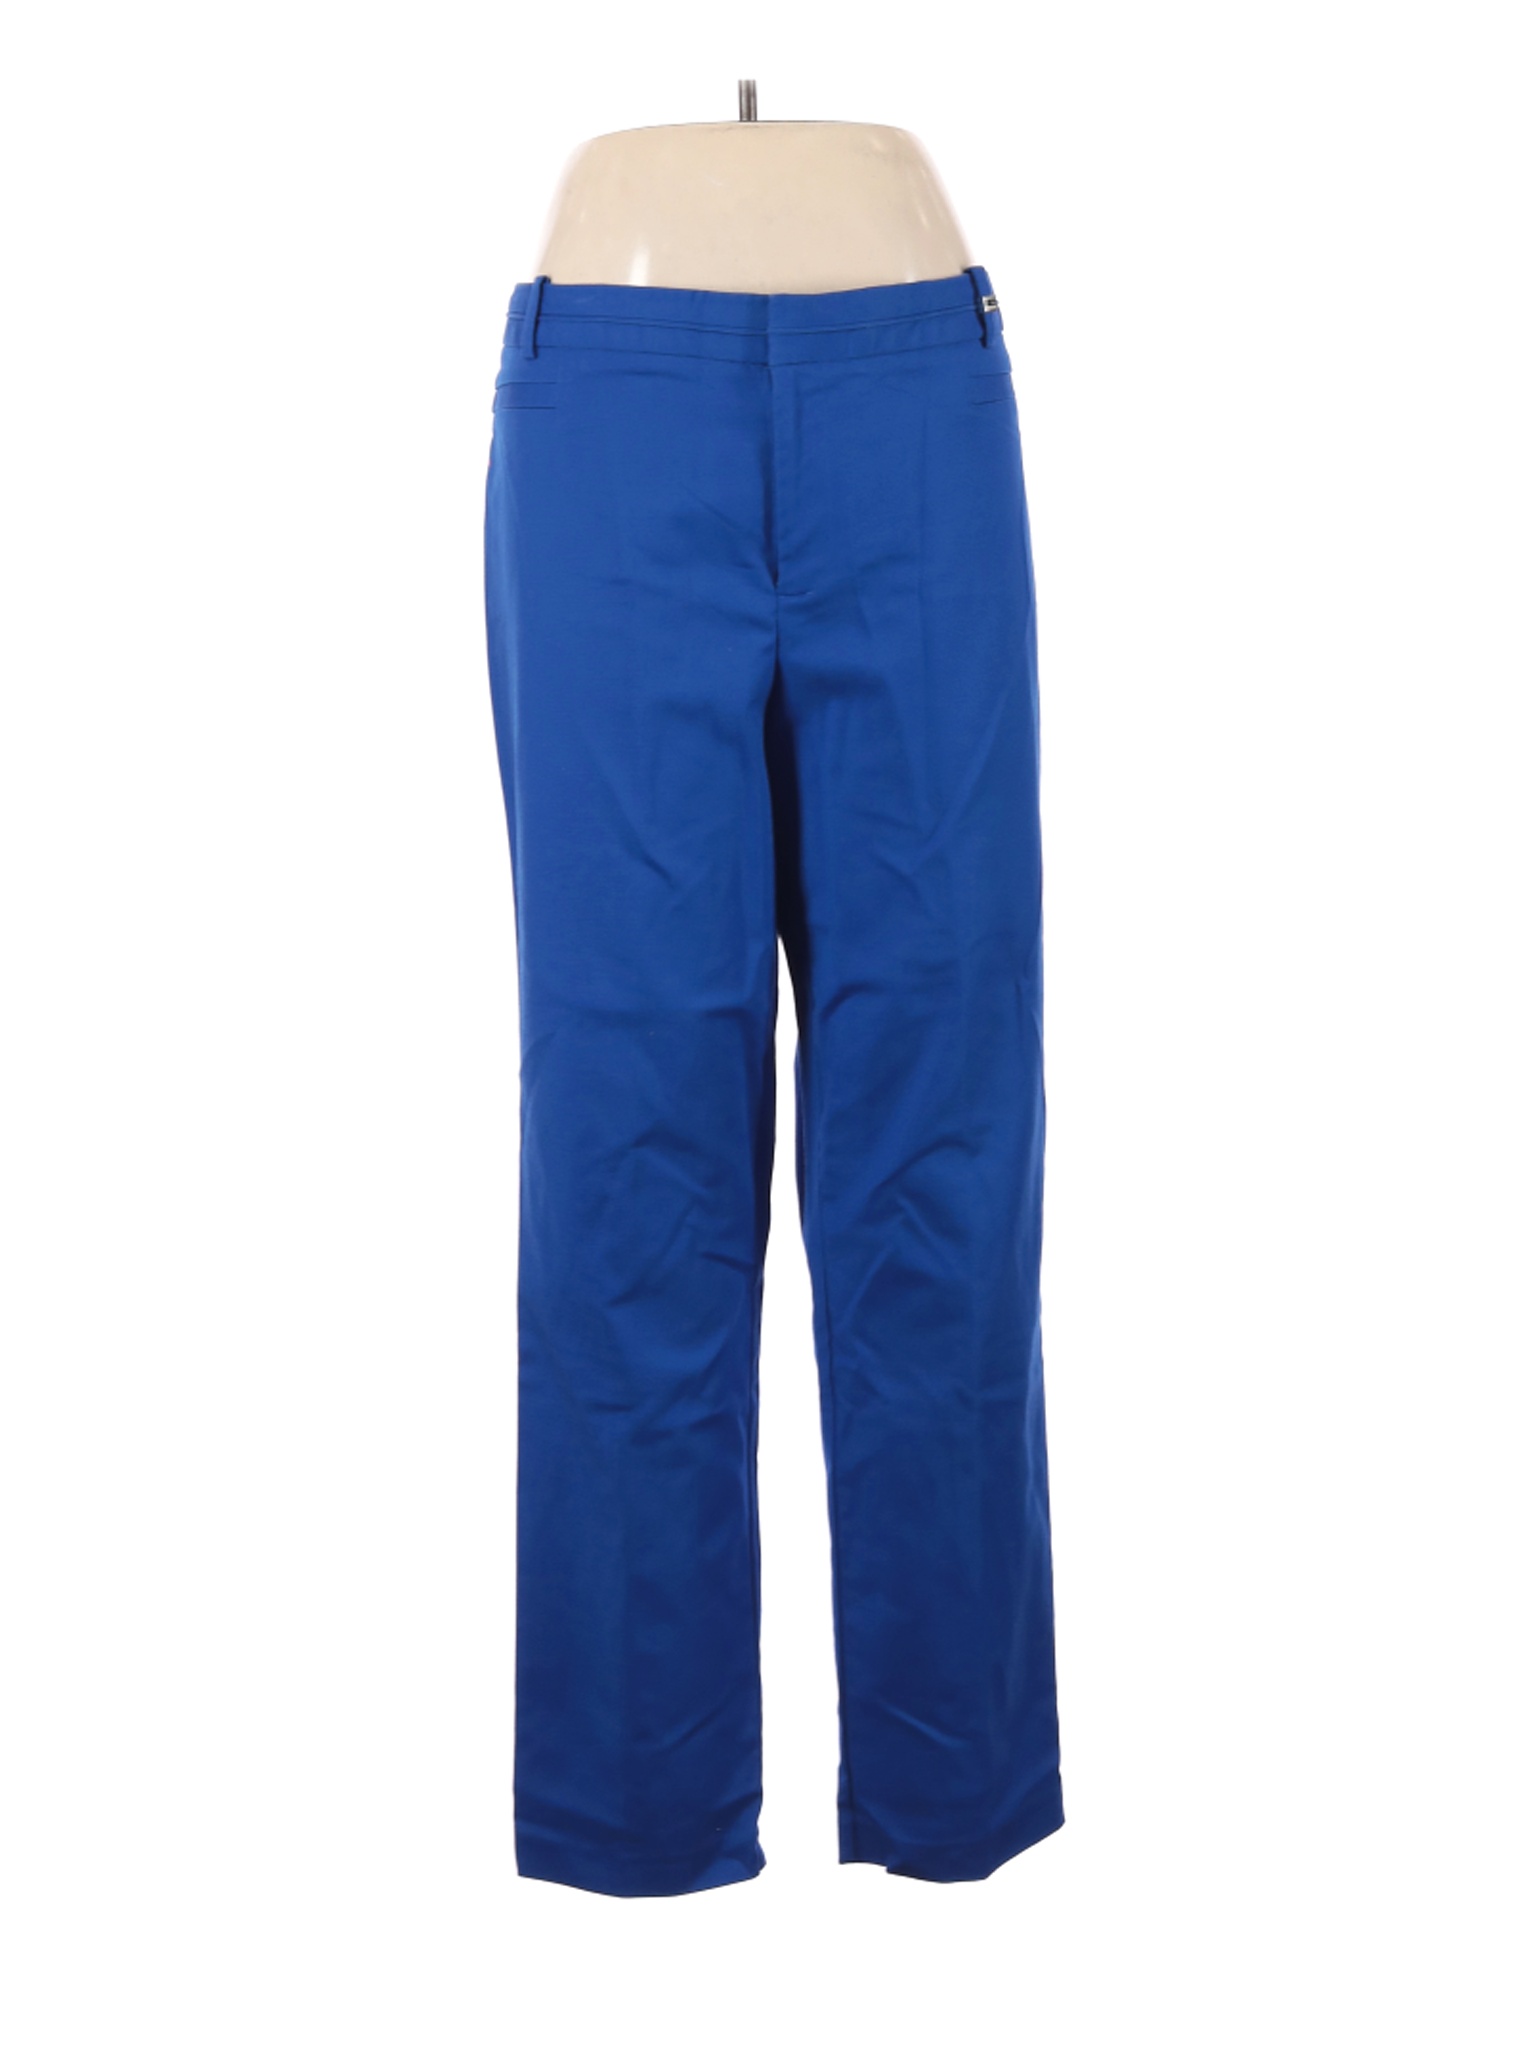 Calvin Klein Women Blue Dress Pants 16 | eBay